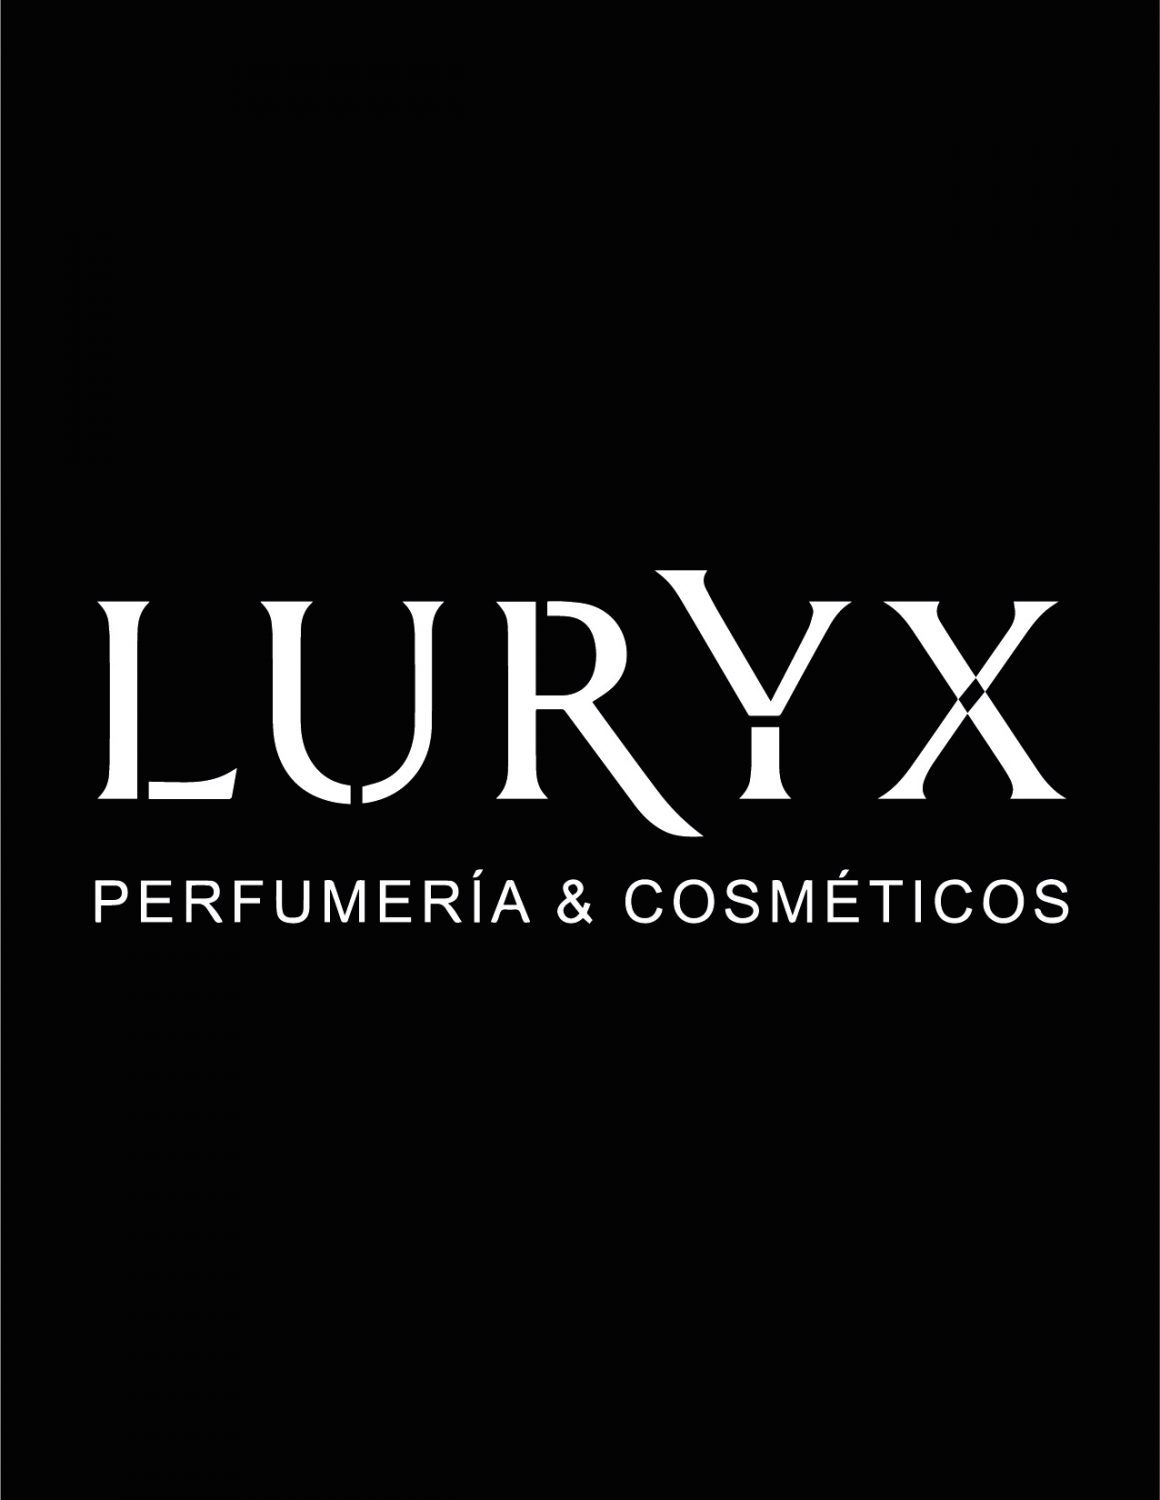 LURYX